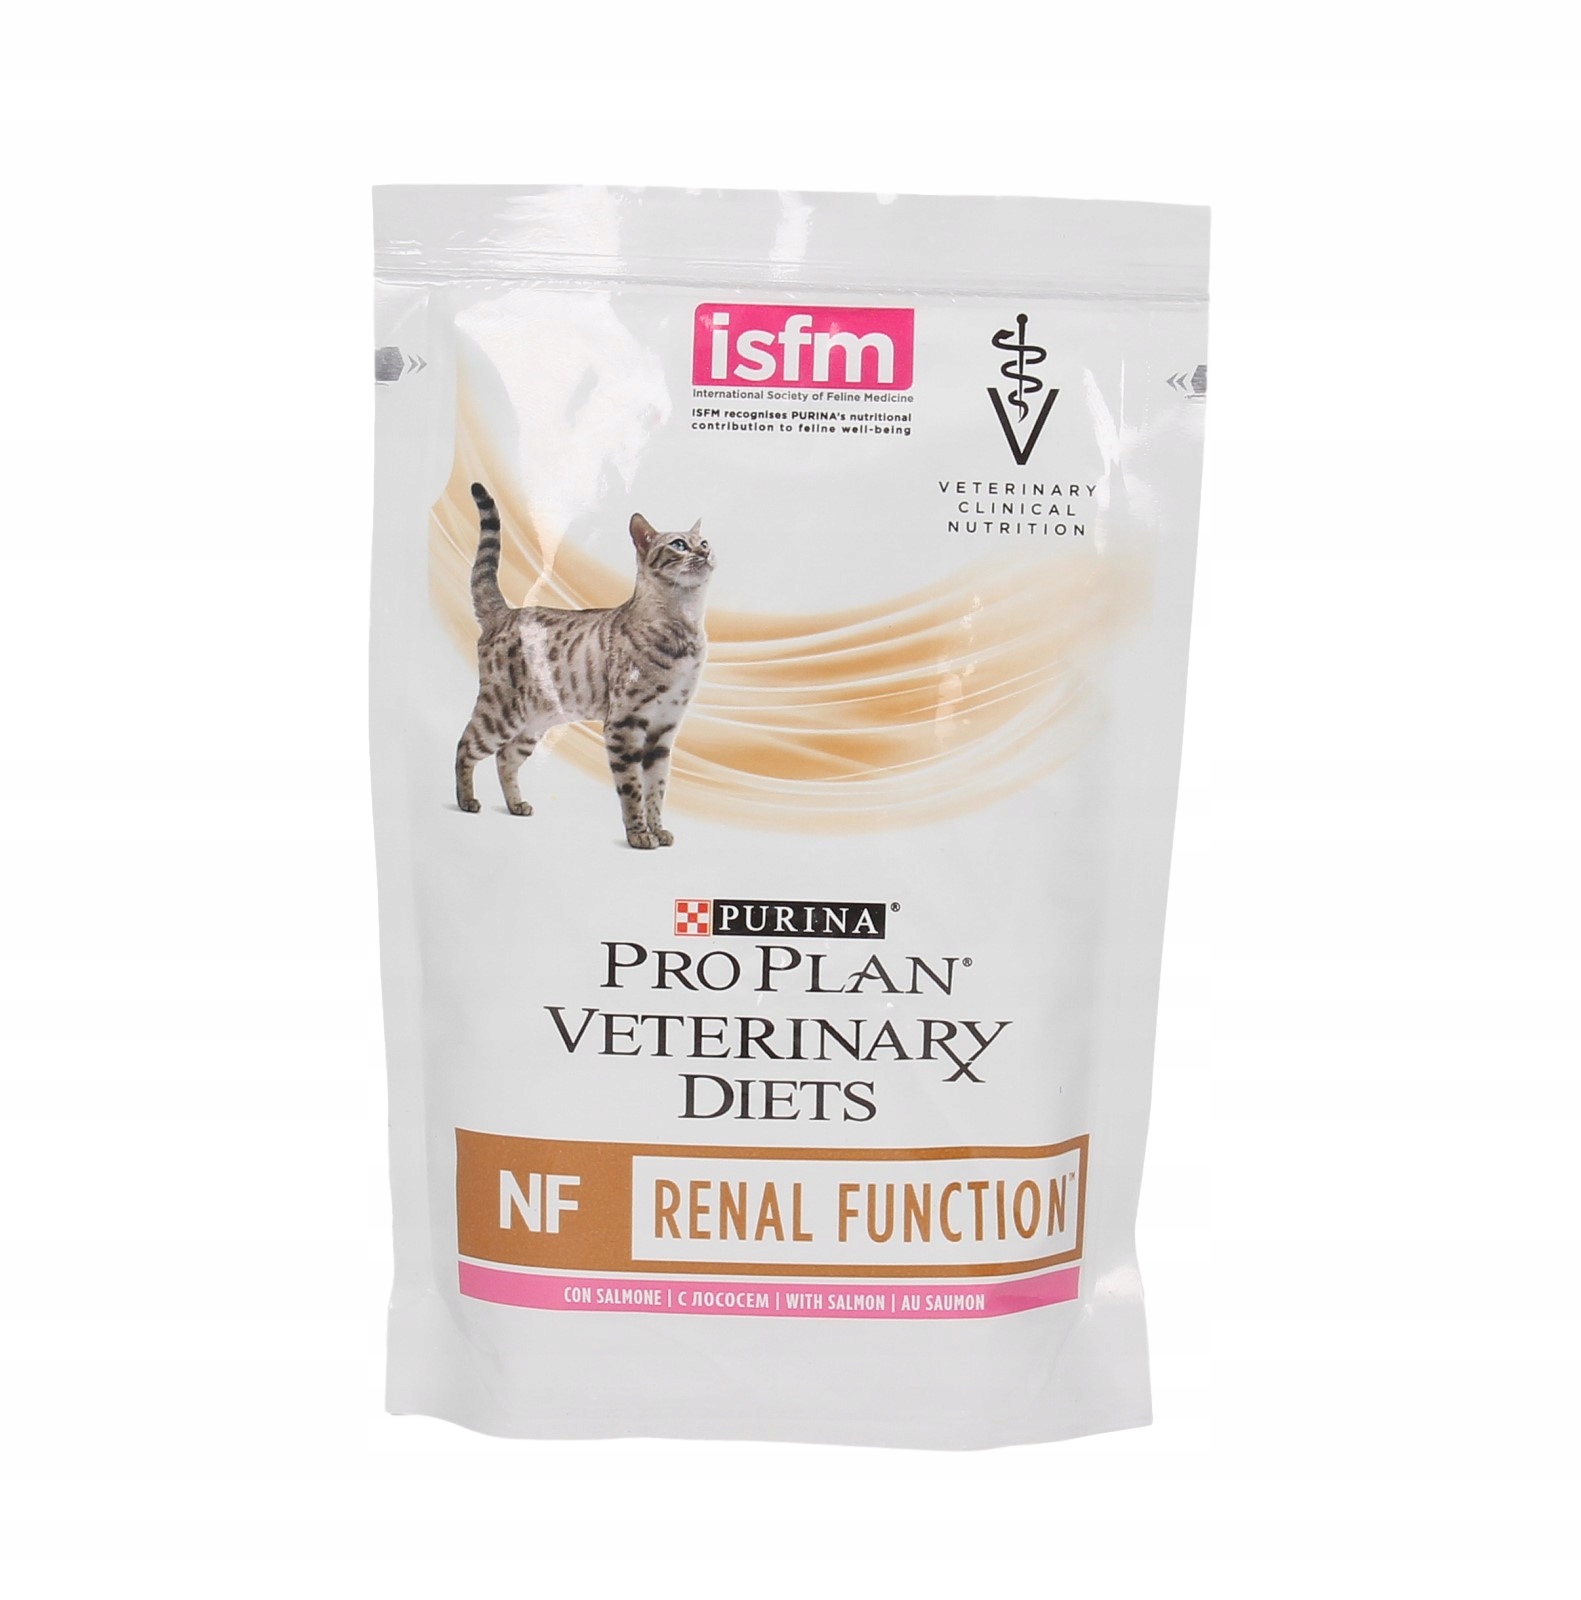 Корм pro plan renal для кошек. Renal Purina Pro Plan для кошек Veterinary Diets. Pro Plan renal пауч. NF renal function корм для кошек. Пурина корм для кошек renal function.